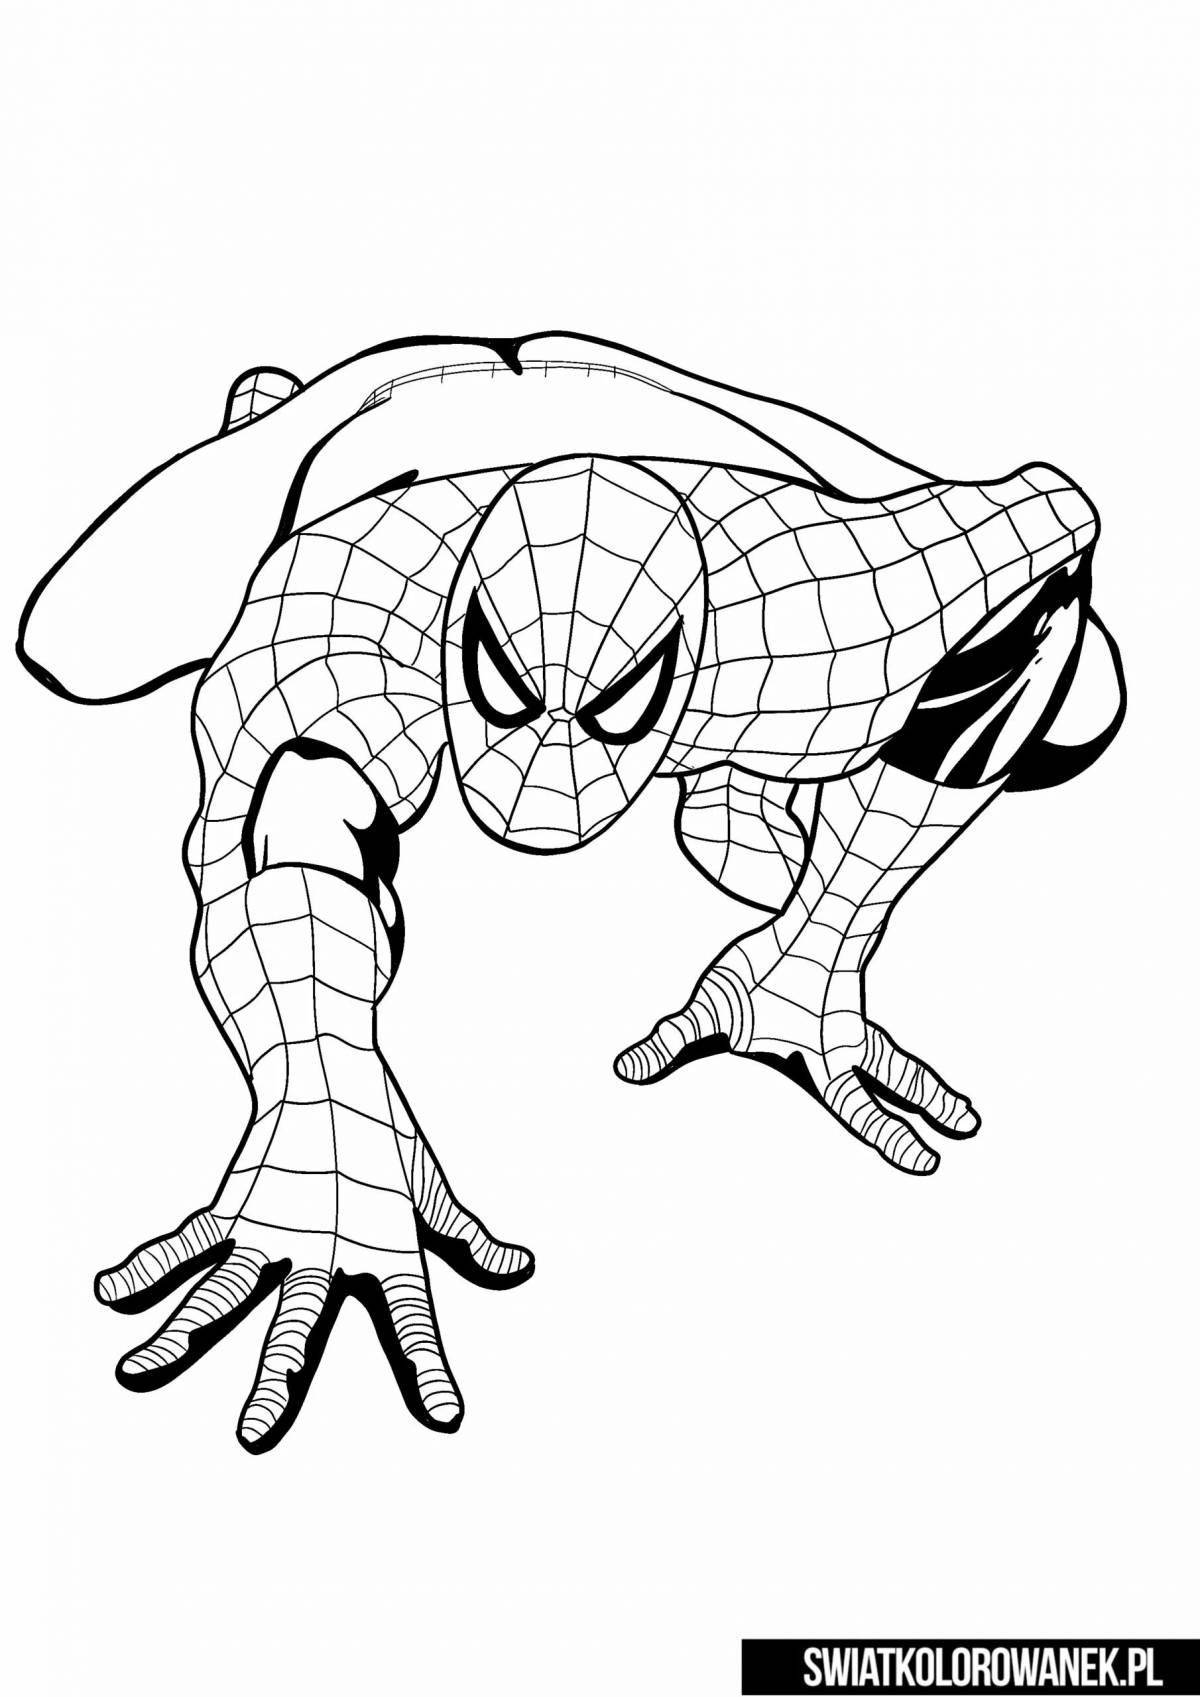 Spiderman's quirky cartoon coloring book